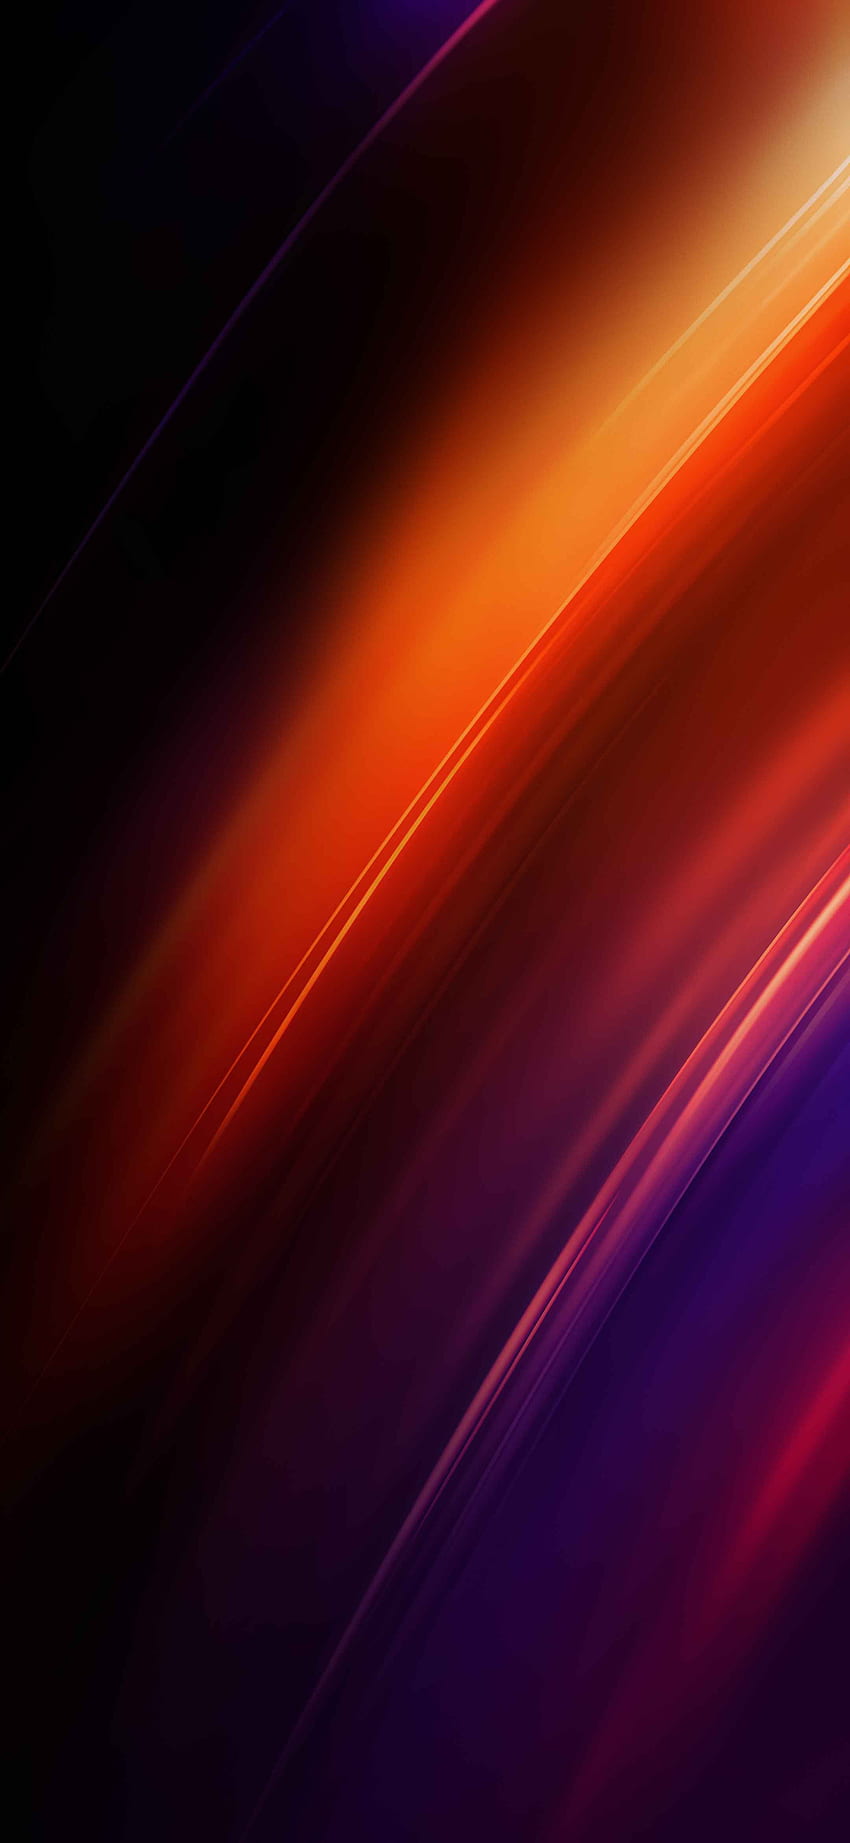 Red, Orange, Blue, Purple, Light, Violet. Cellphone background, iPhone blur, Oneplus HD phone wallpaper